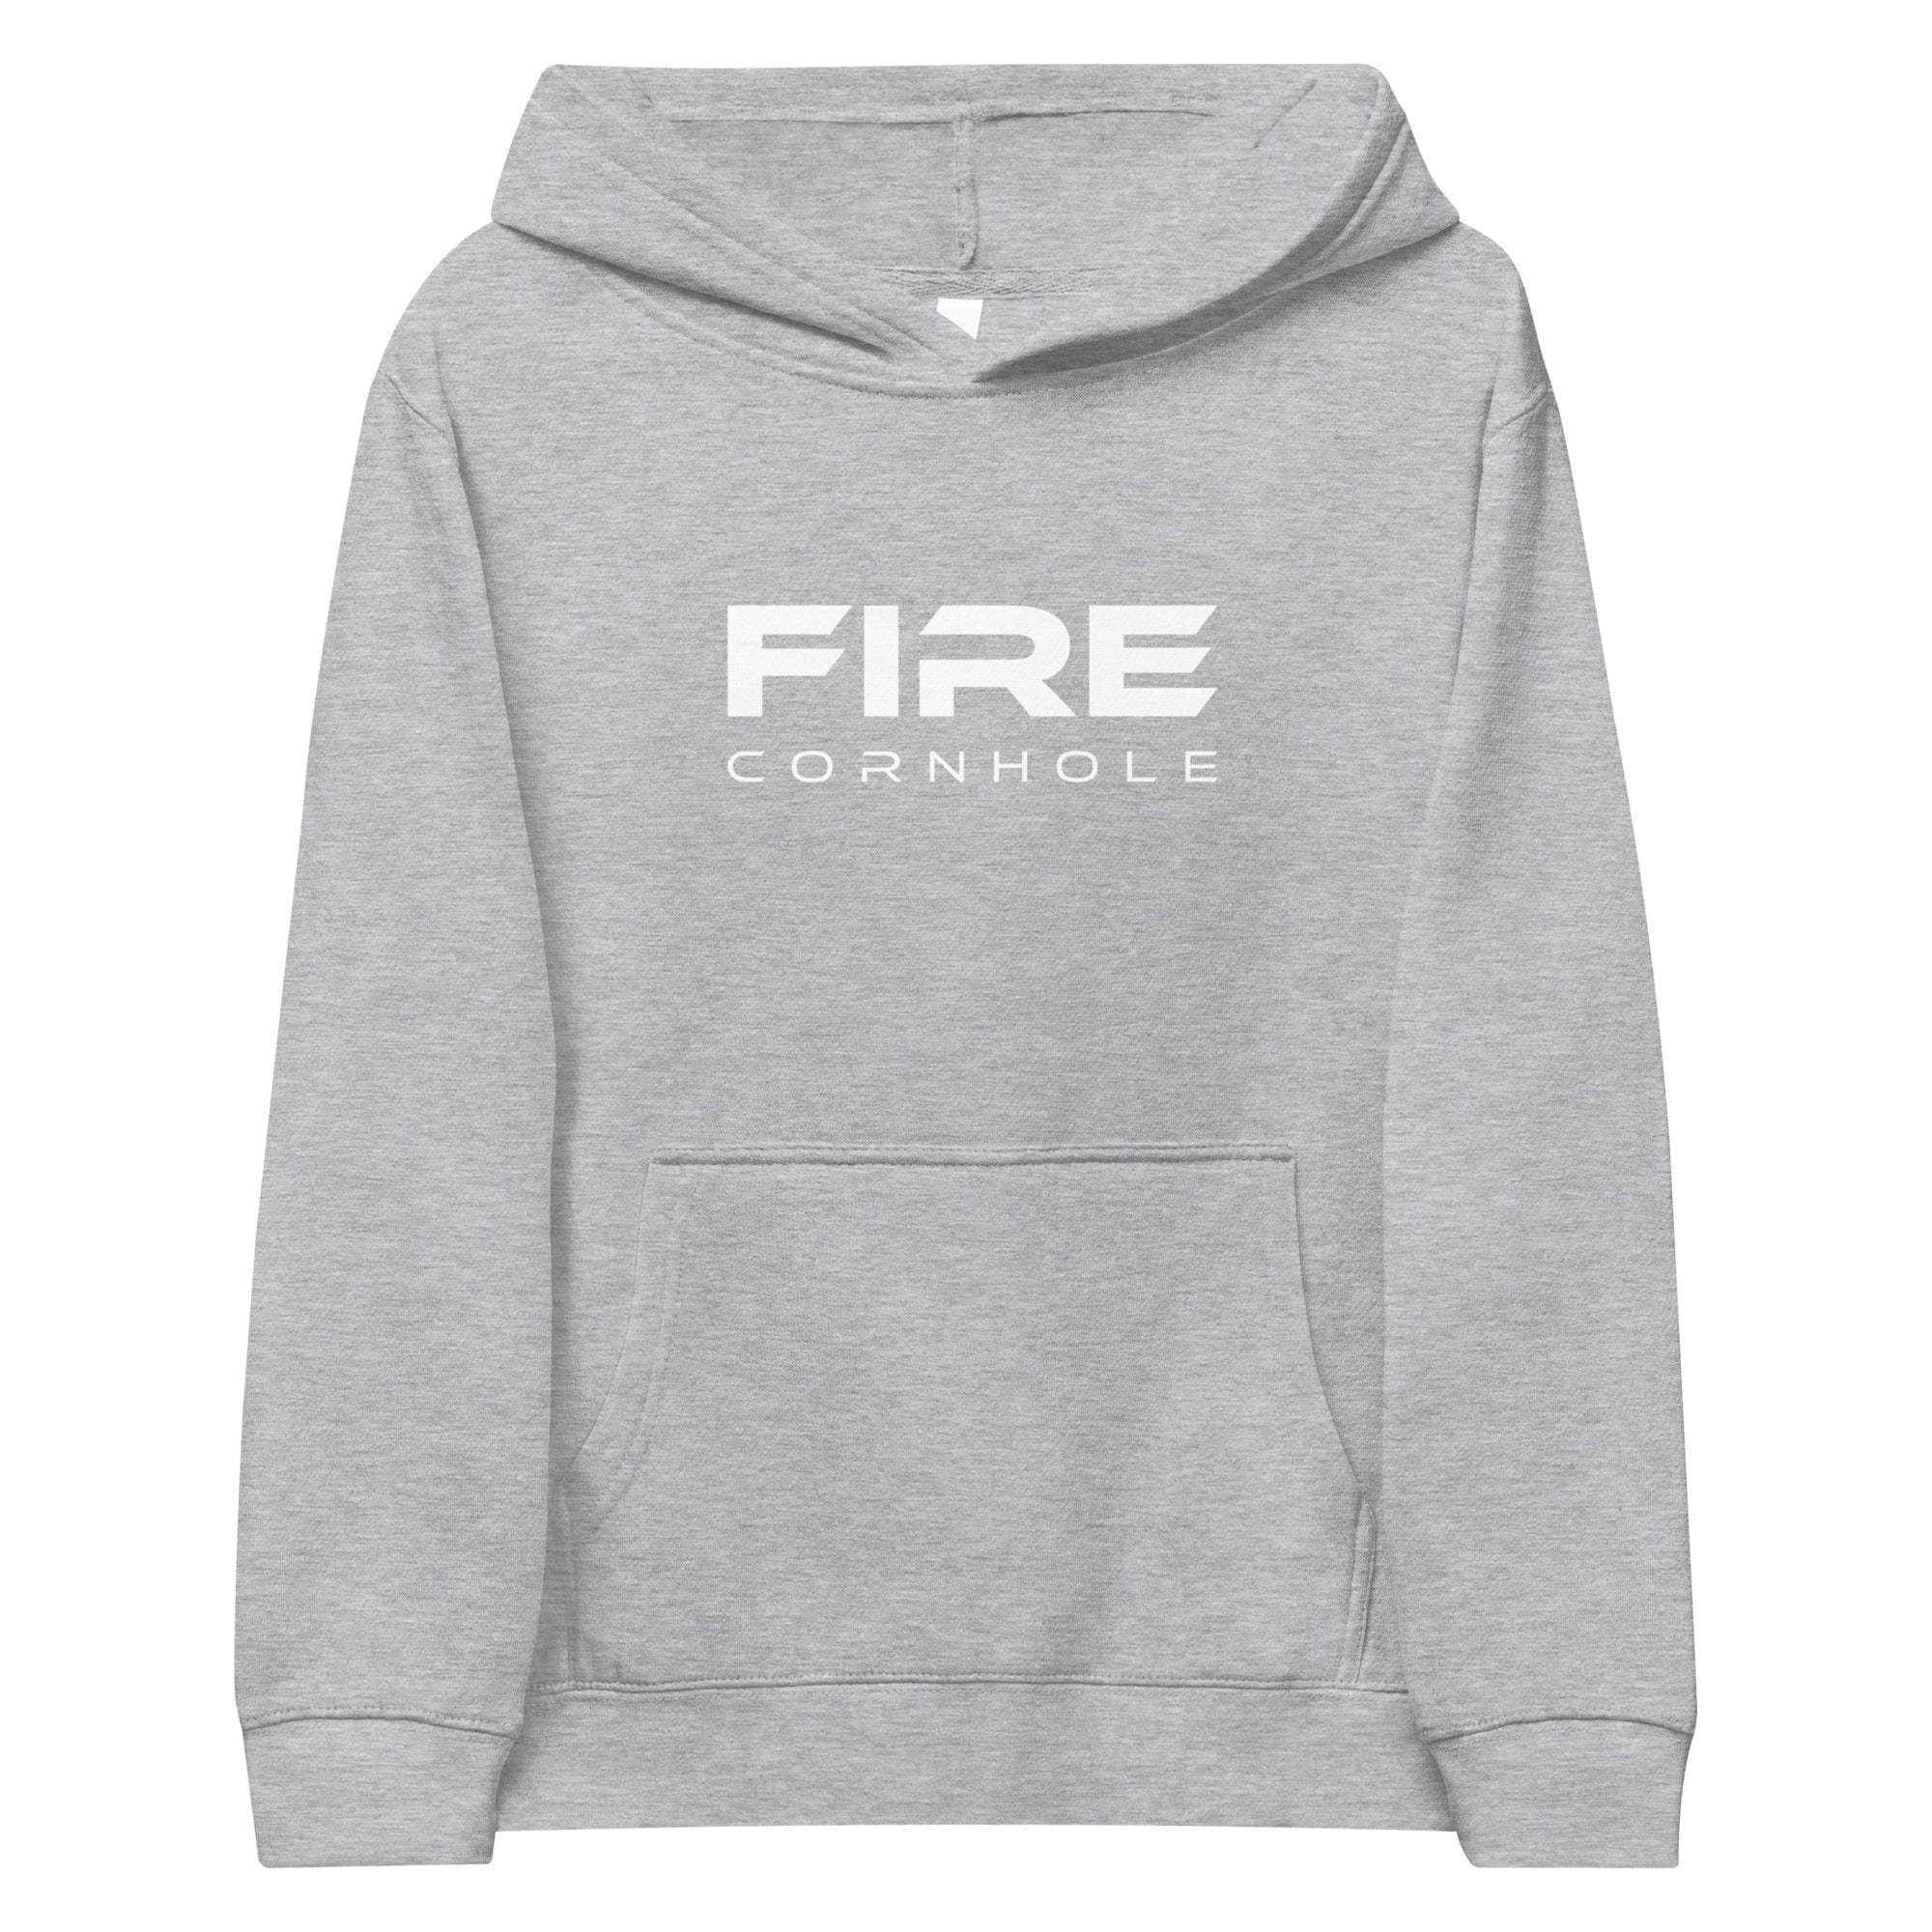 Heathered grey kids fleece hoodie with Fire Cornhole logo in white